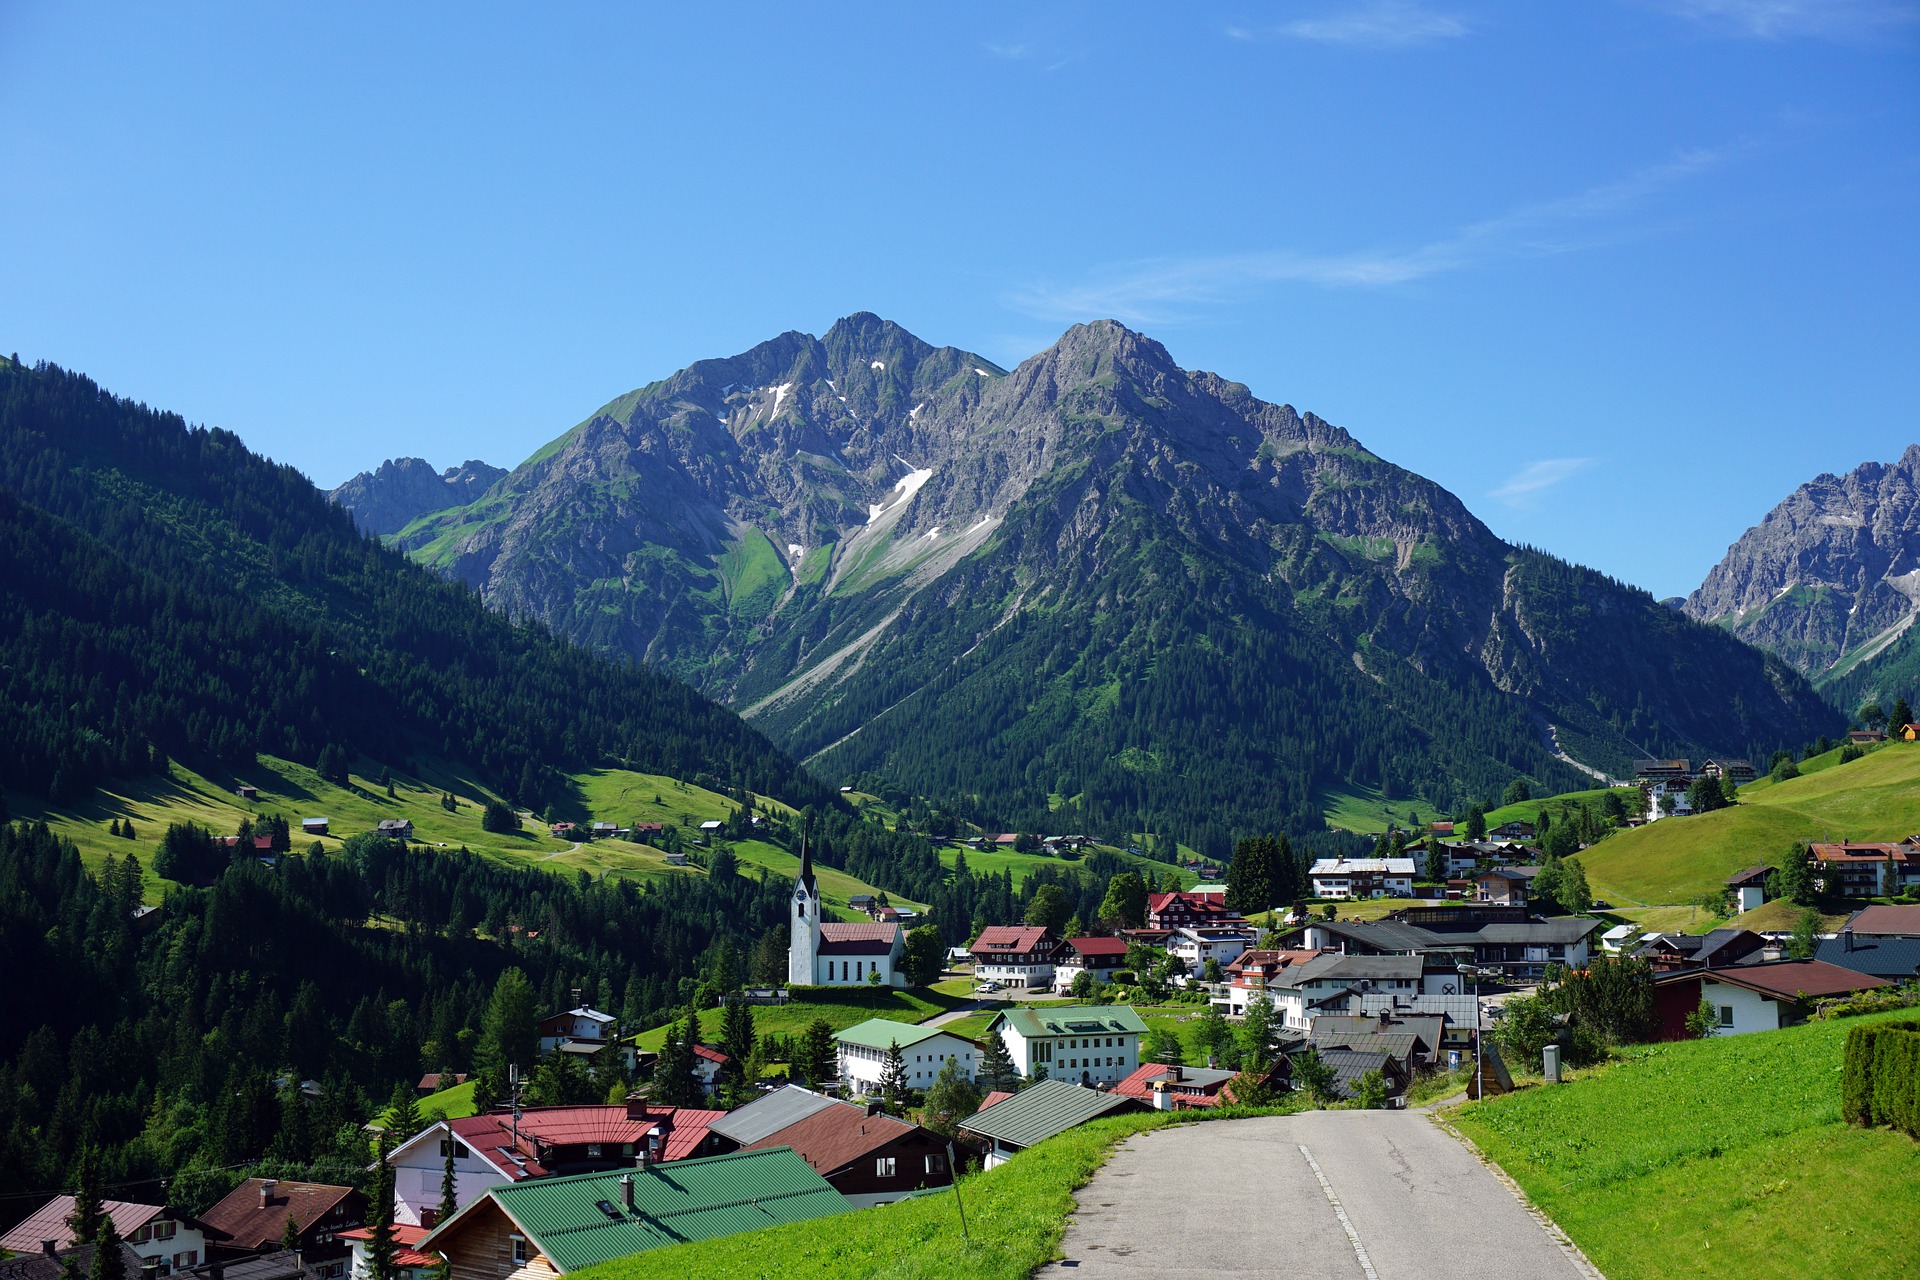 Alpen Camping Urlaub